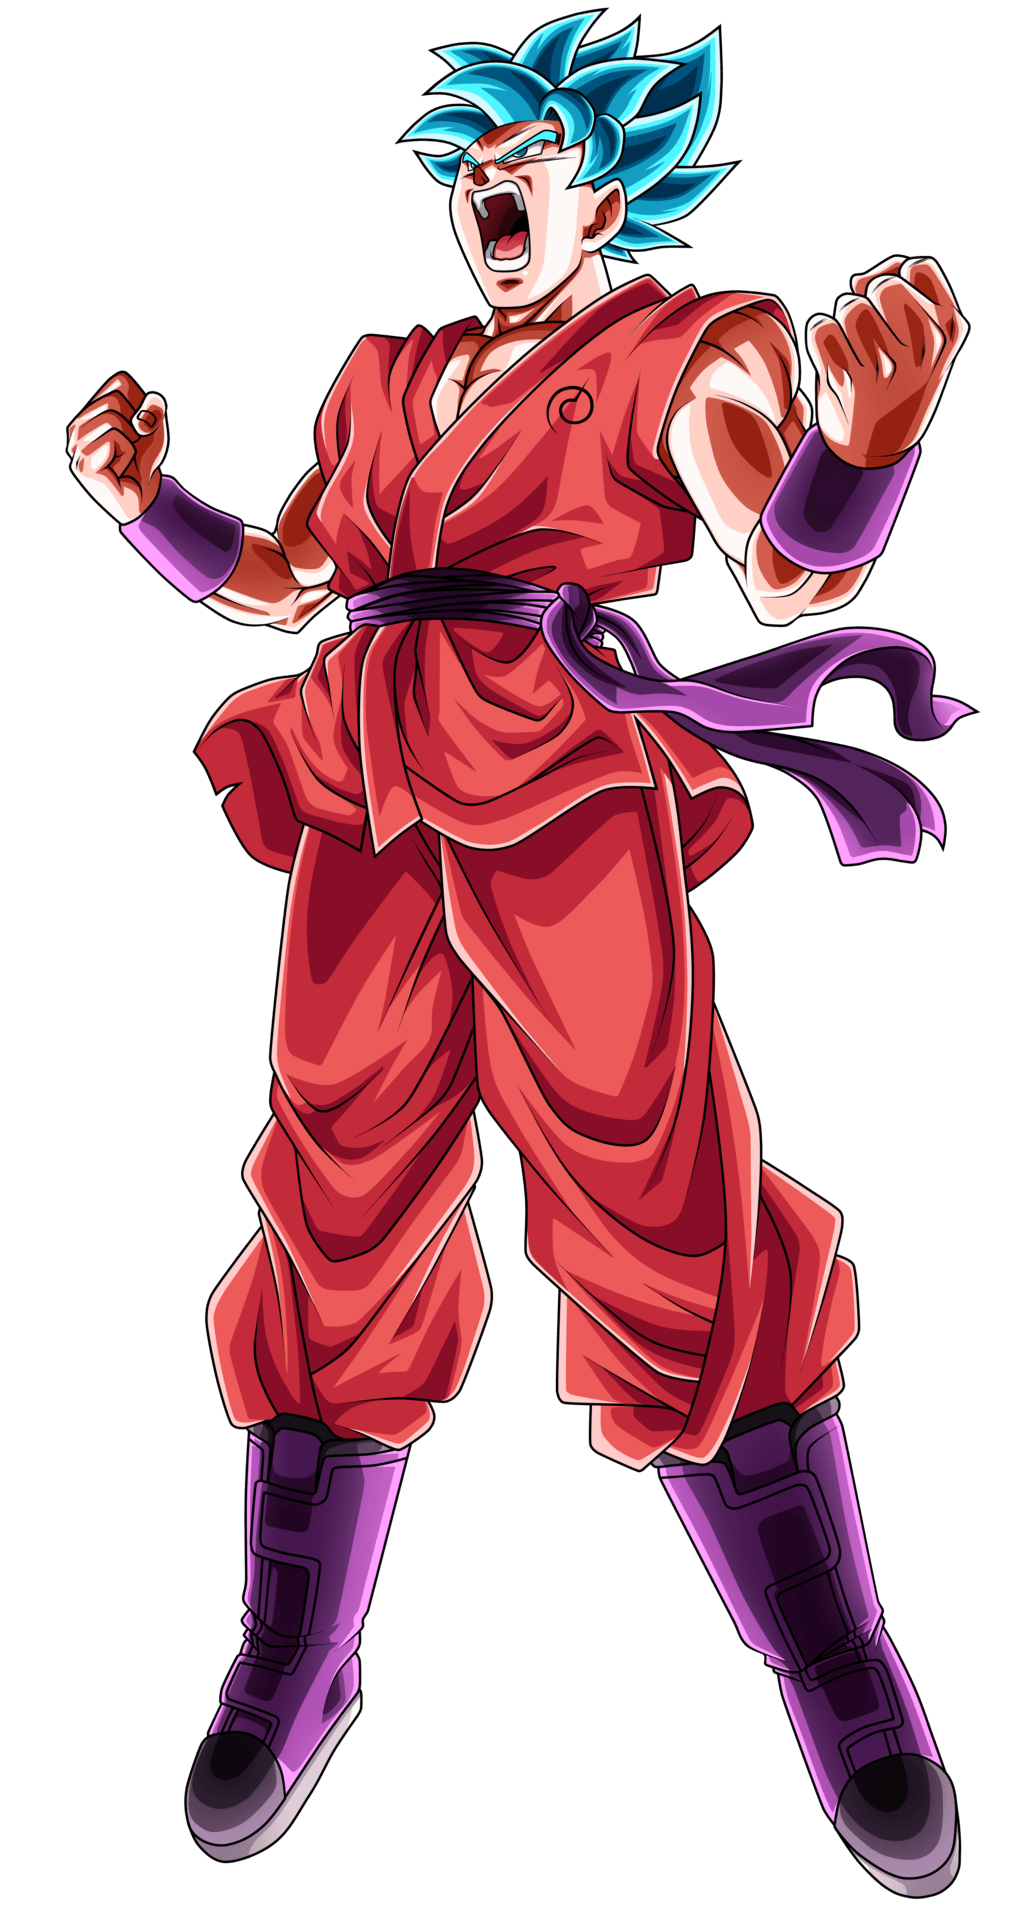 Son Goku Super Saiyan Blue Kaioken 2 By Nekoar Dasjoli.png